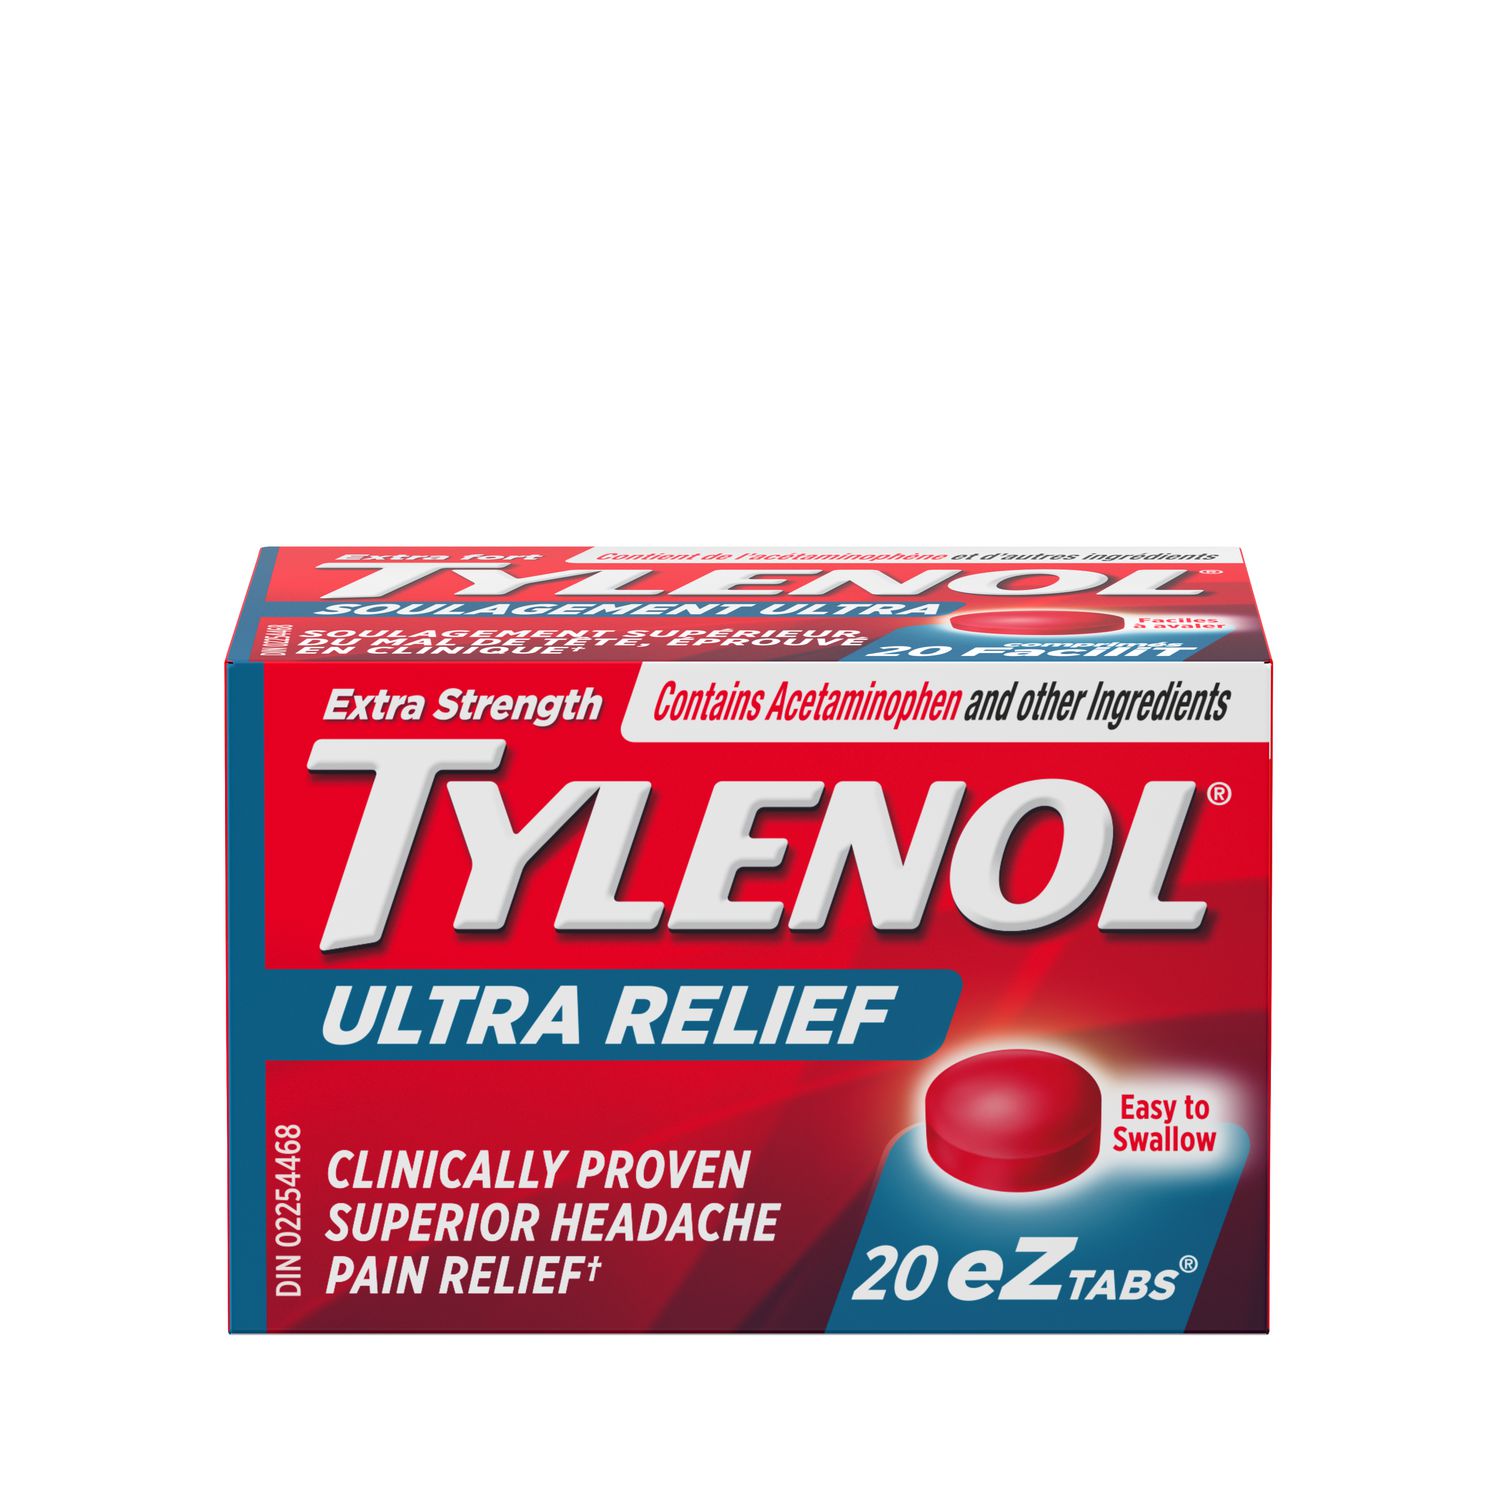 side effect of tylenol reserach